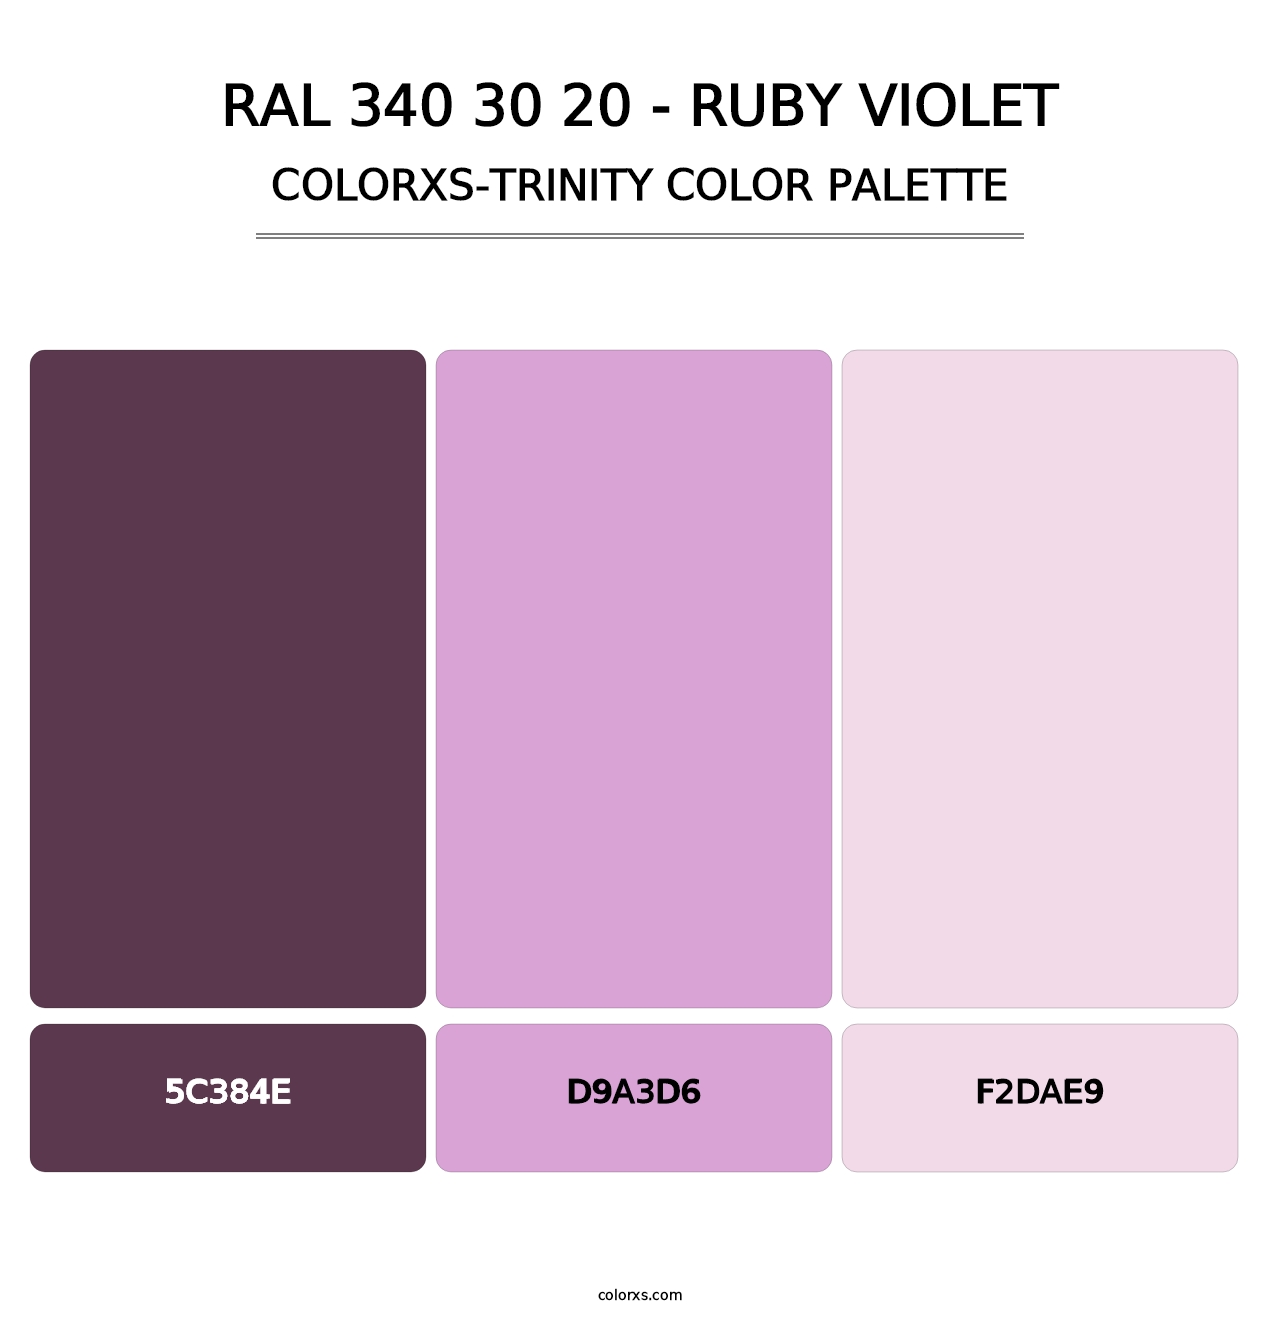 RAL 340 30 20 - Ruby Violet - Colorxs Trinity Palette